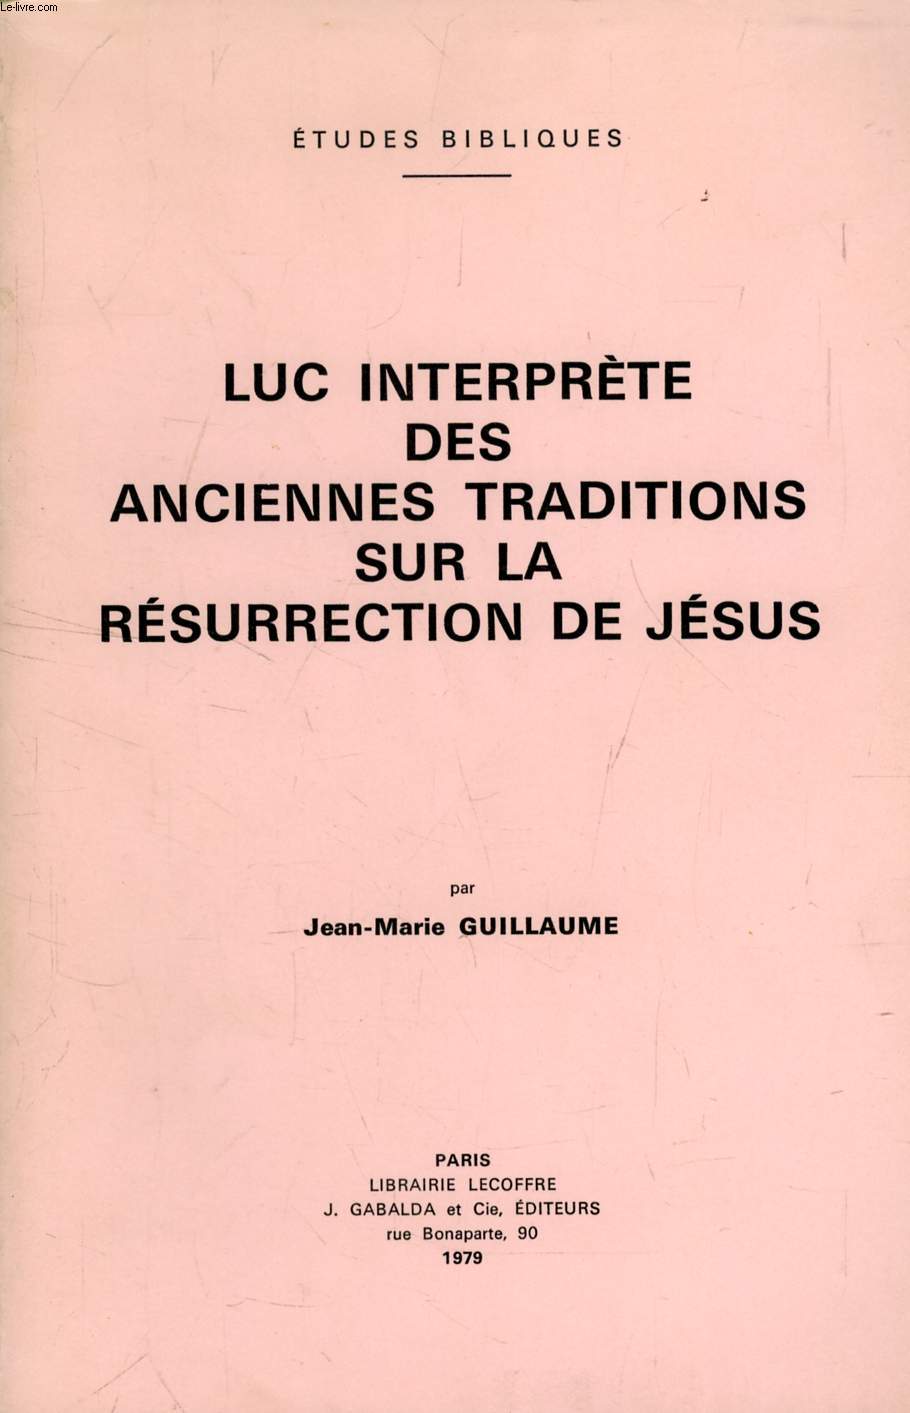 LUC INTERPRETE DES ANCIENNES TRADITIONS SUR LA RESURRECTION DE JESUS